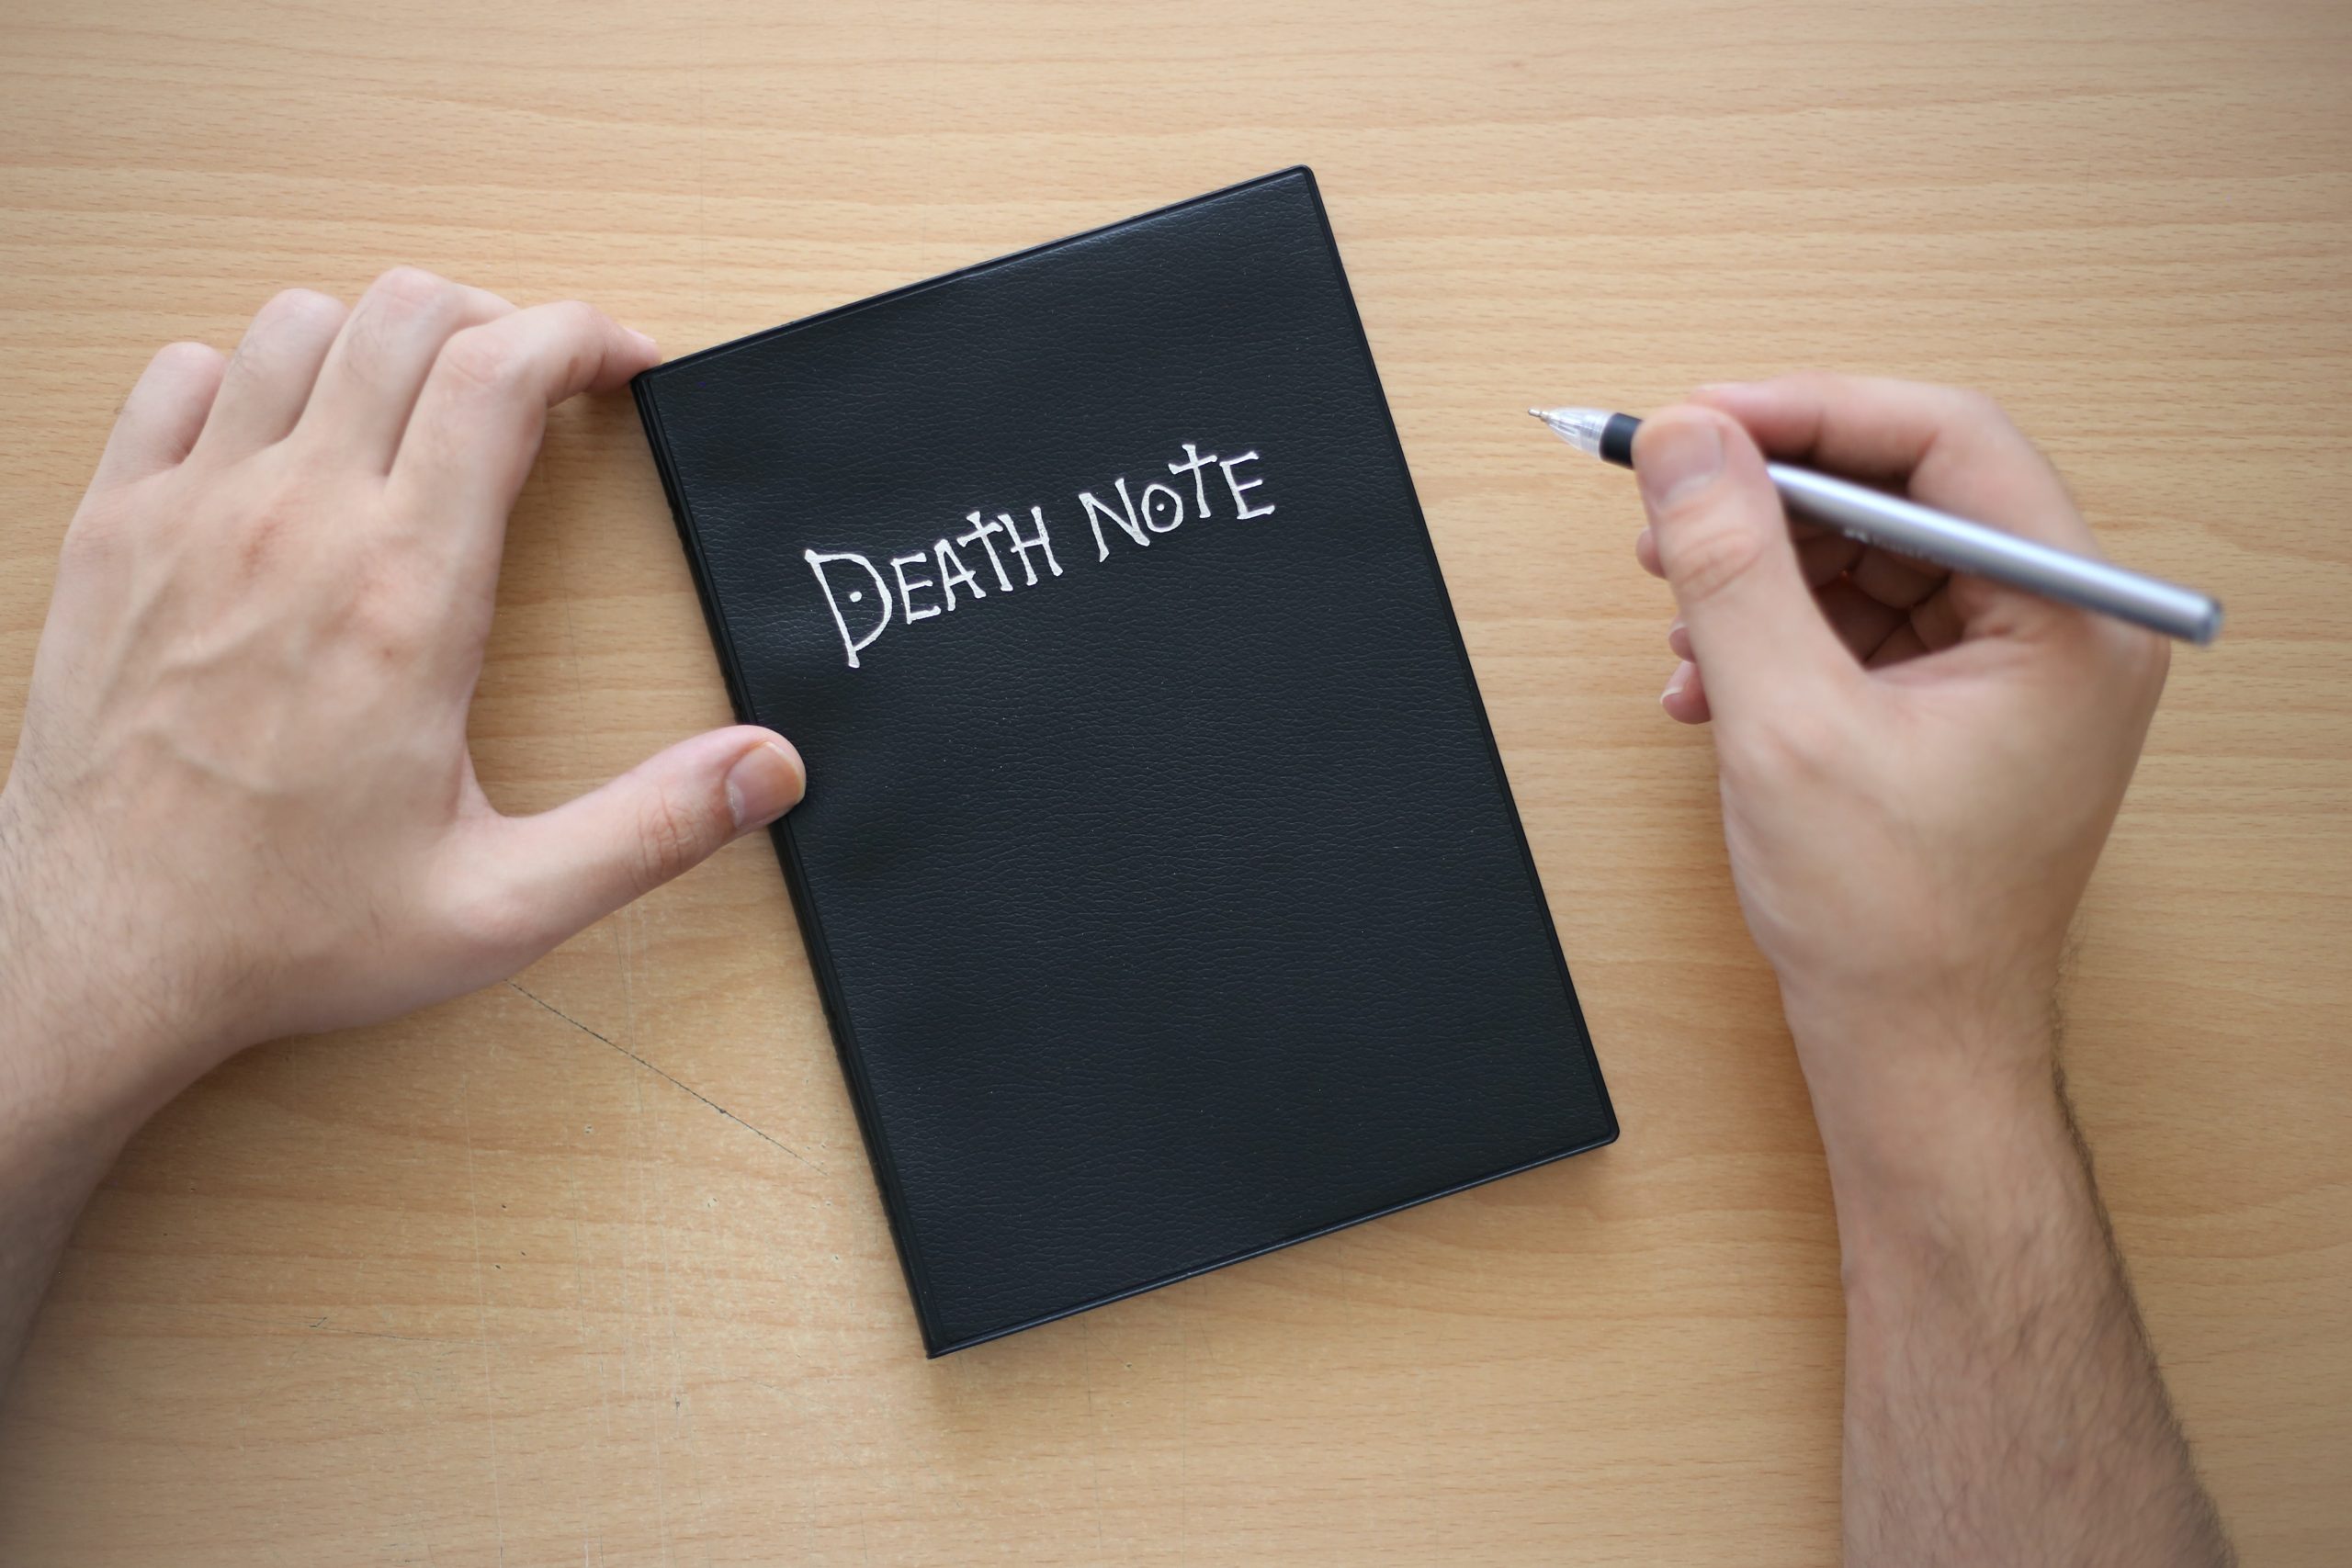 asura scan death note